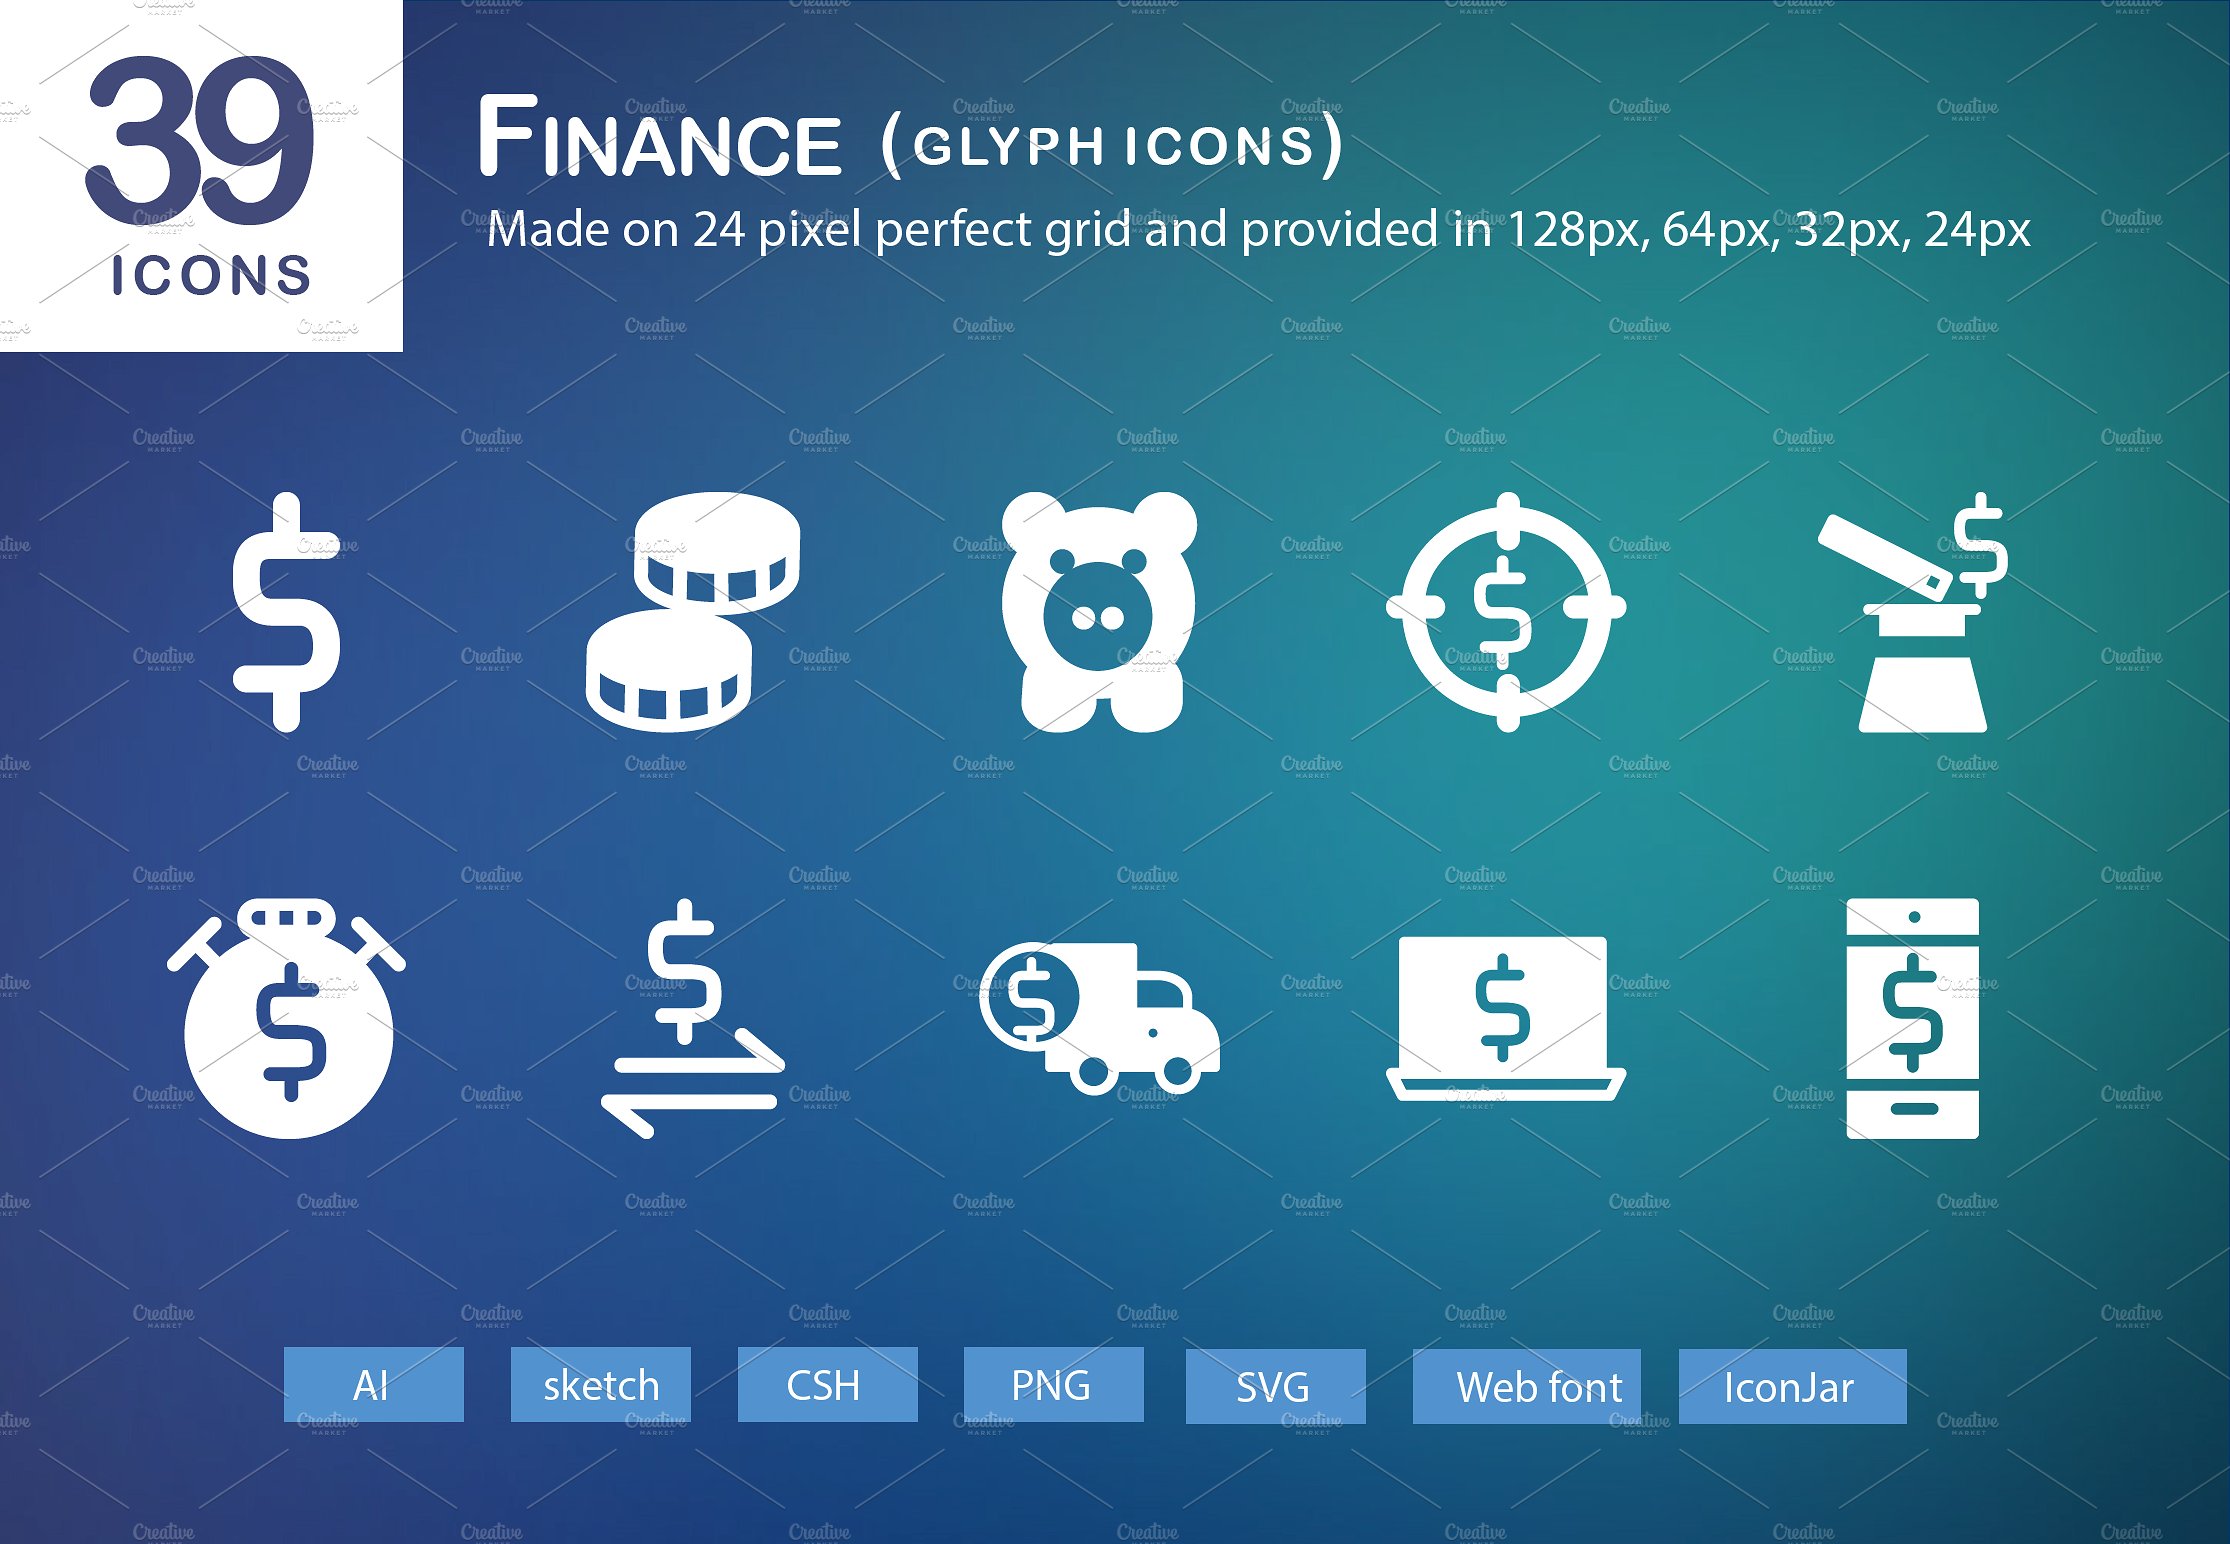 39 Finance Glyph Icons